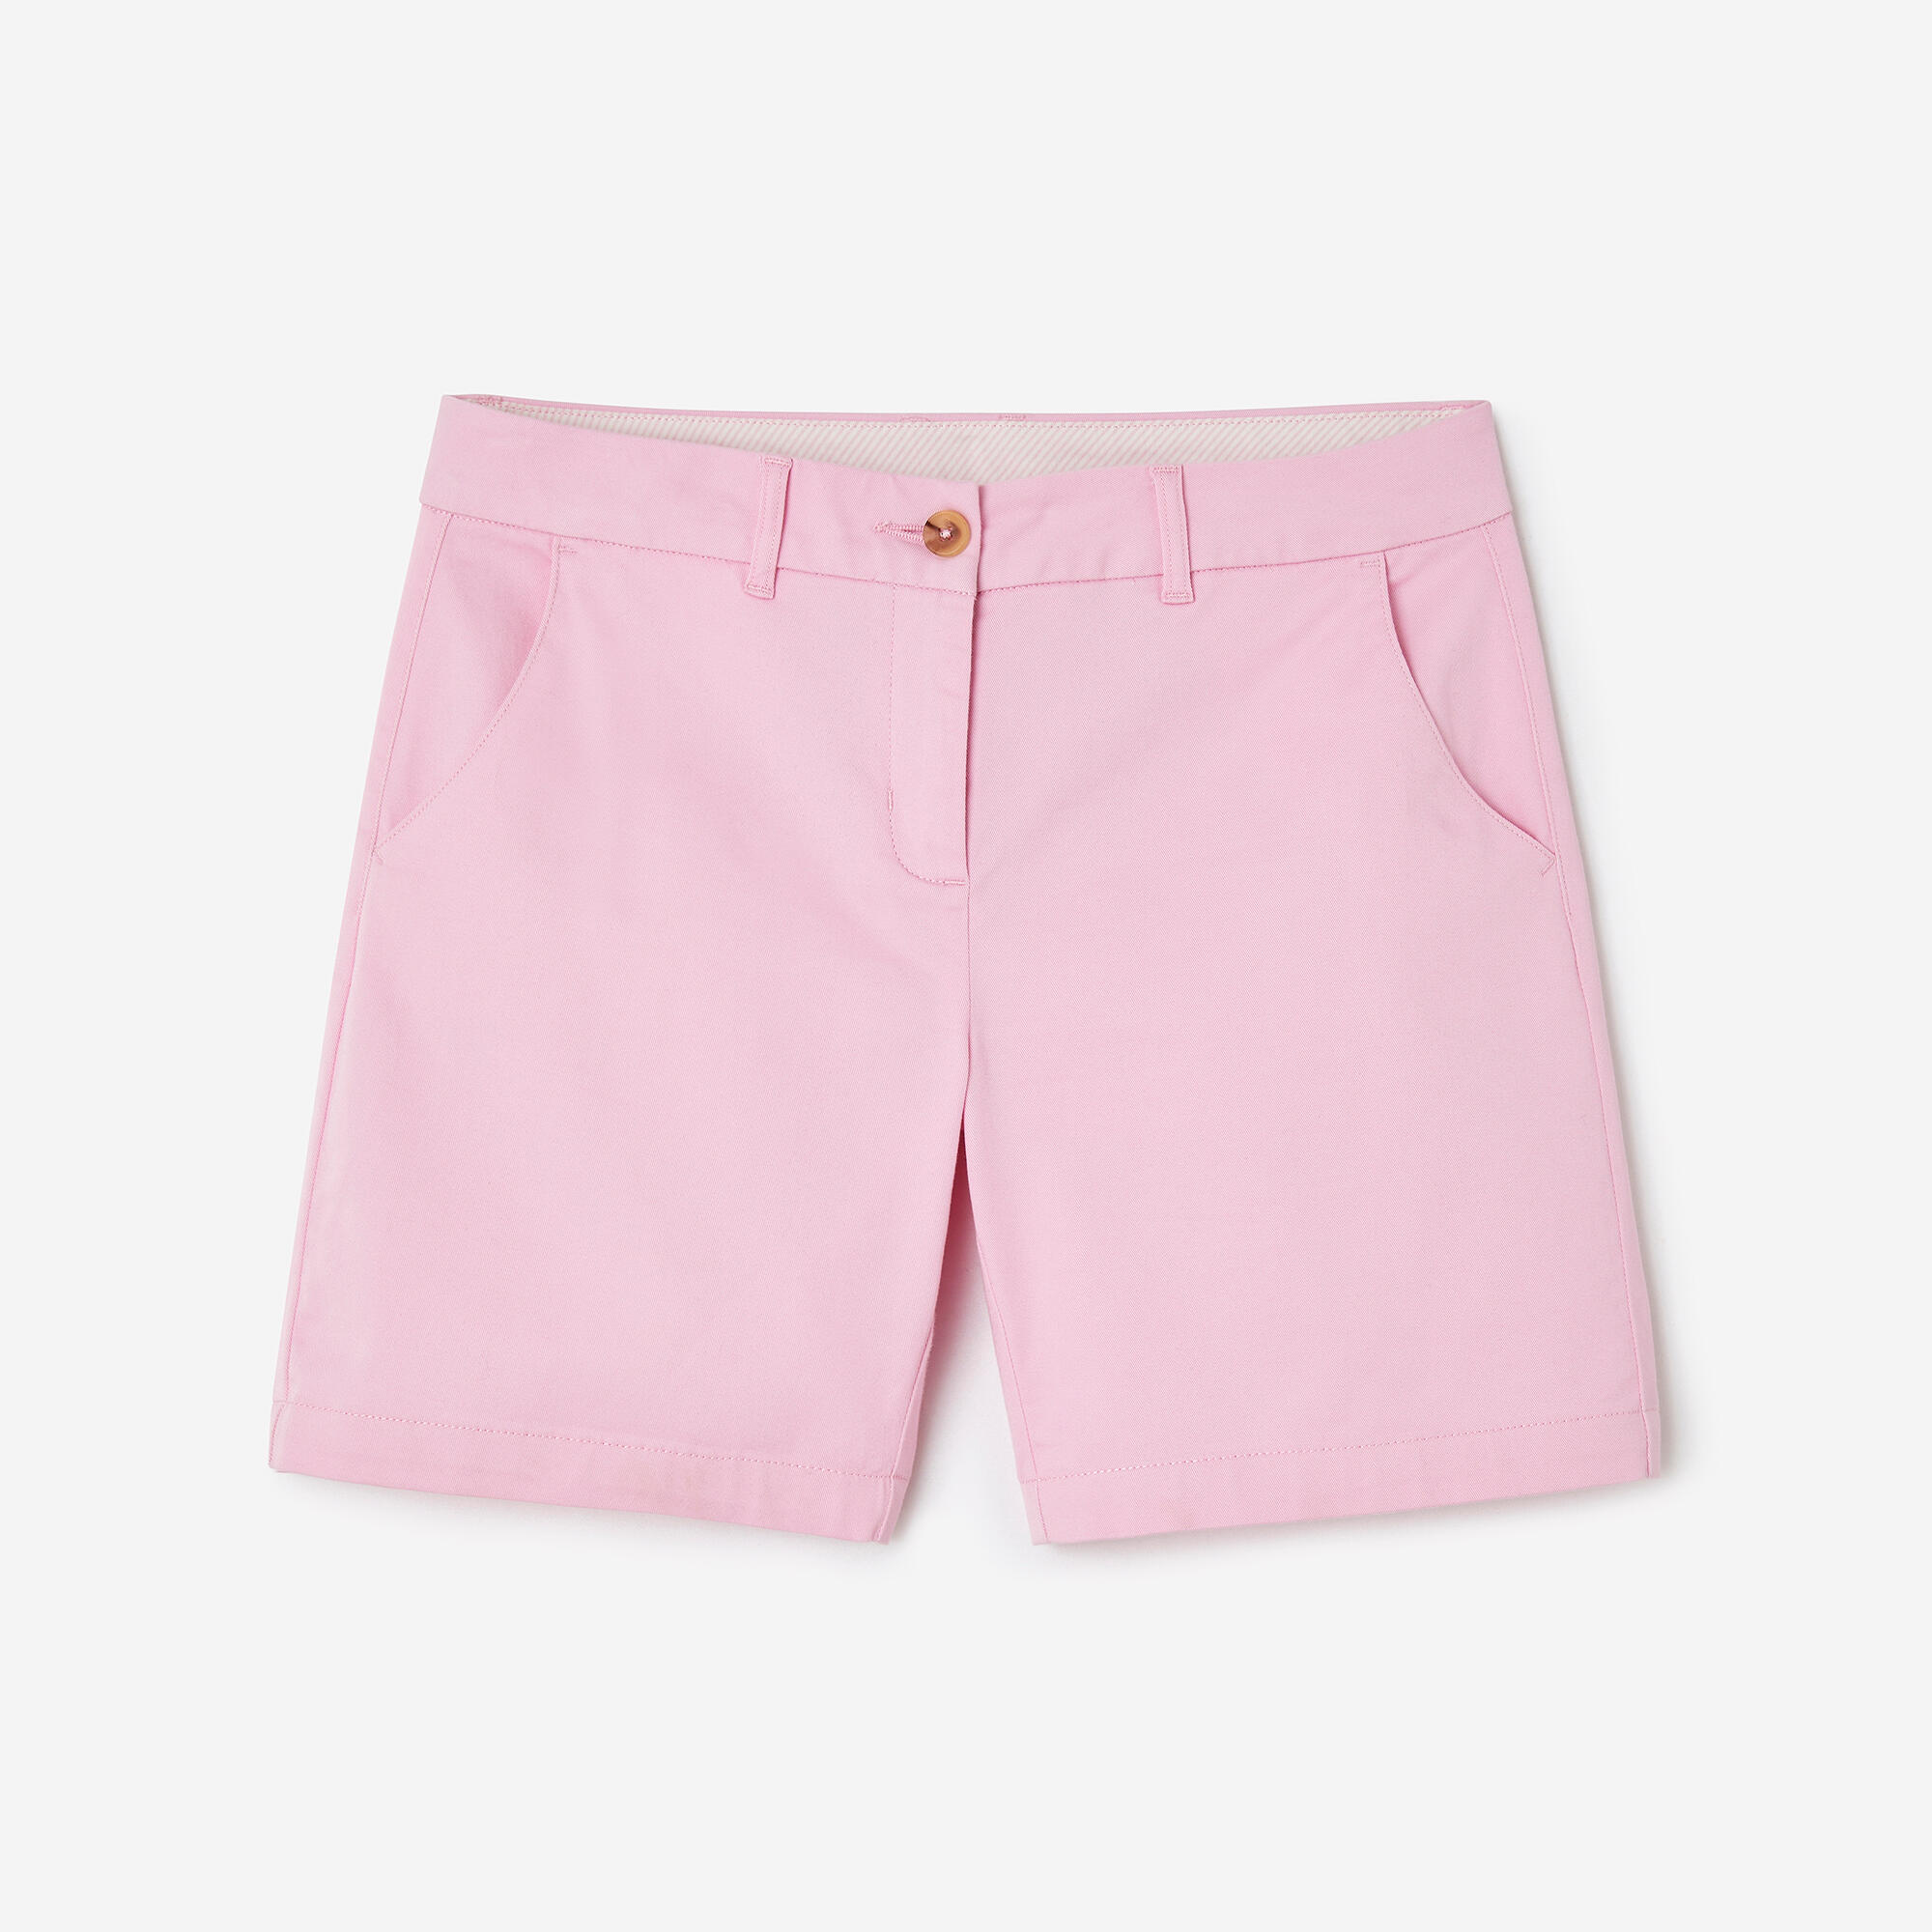 Women's golf chino shorts - MW500 light pink 2/4